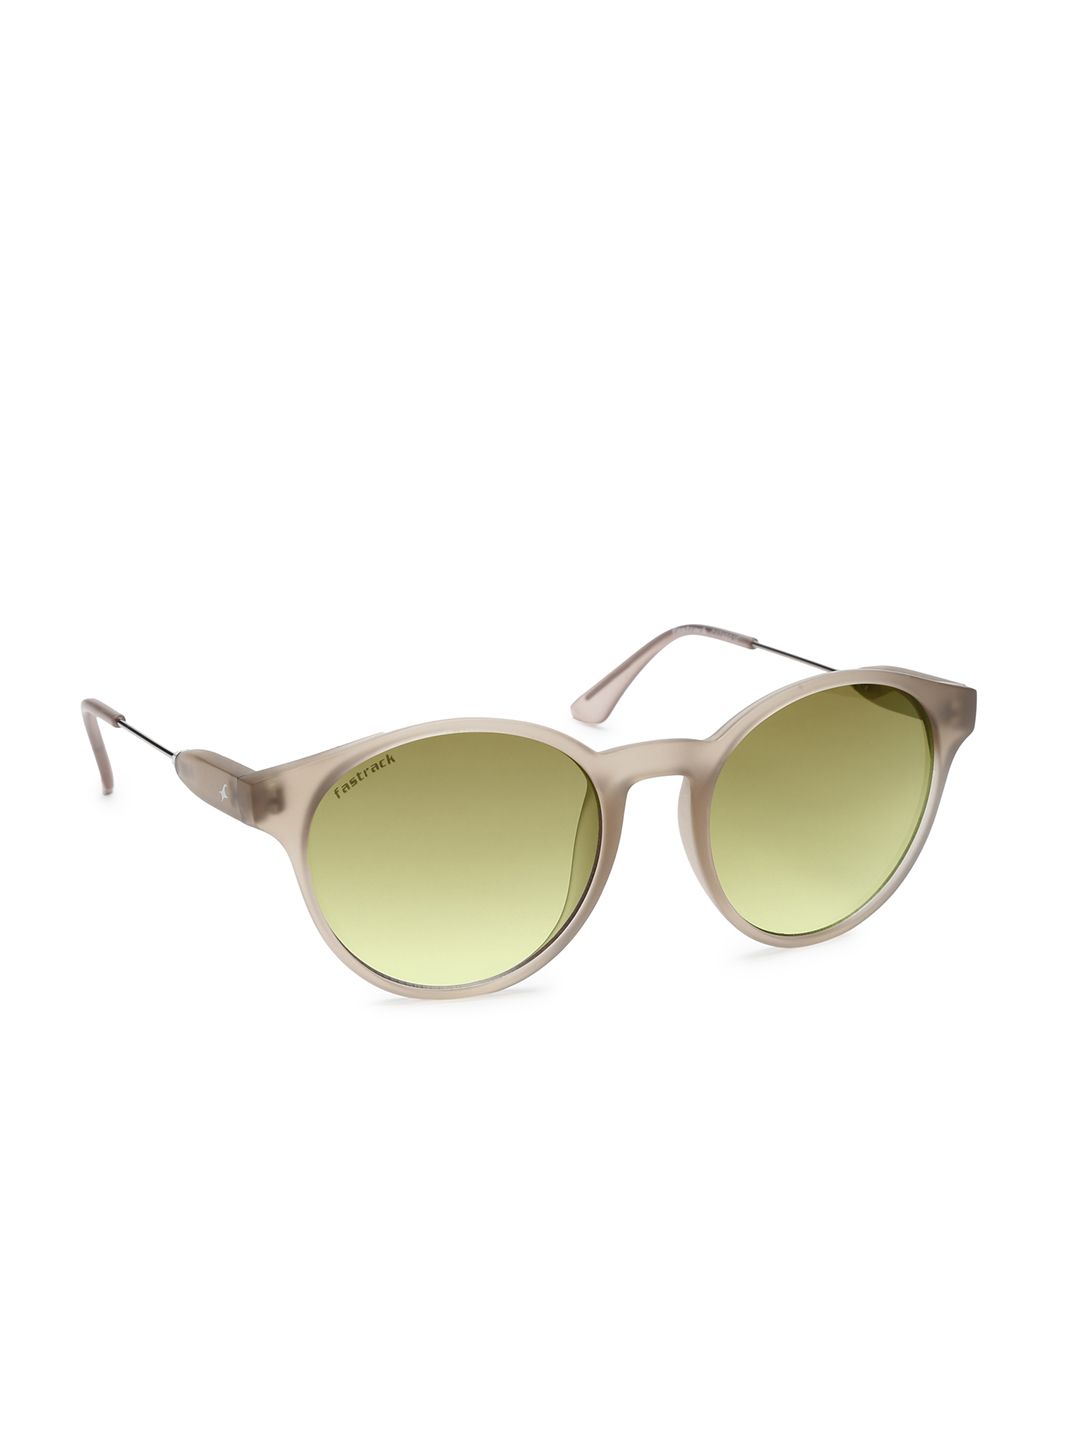 Fastrack Women Round Sunglasses C078BR2F Price in India